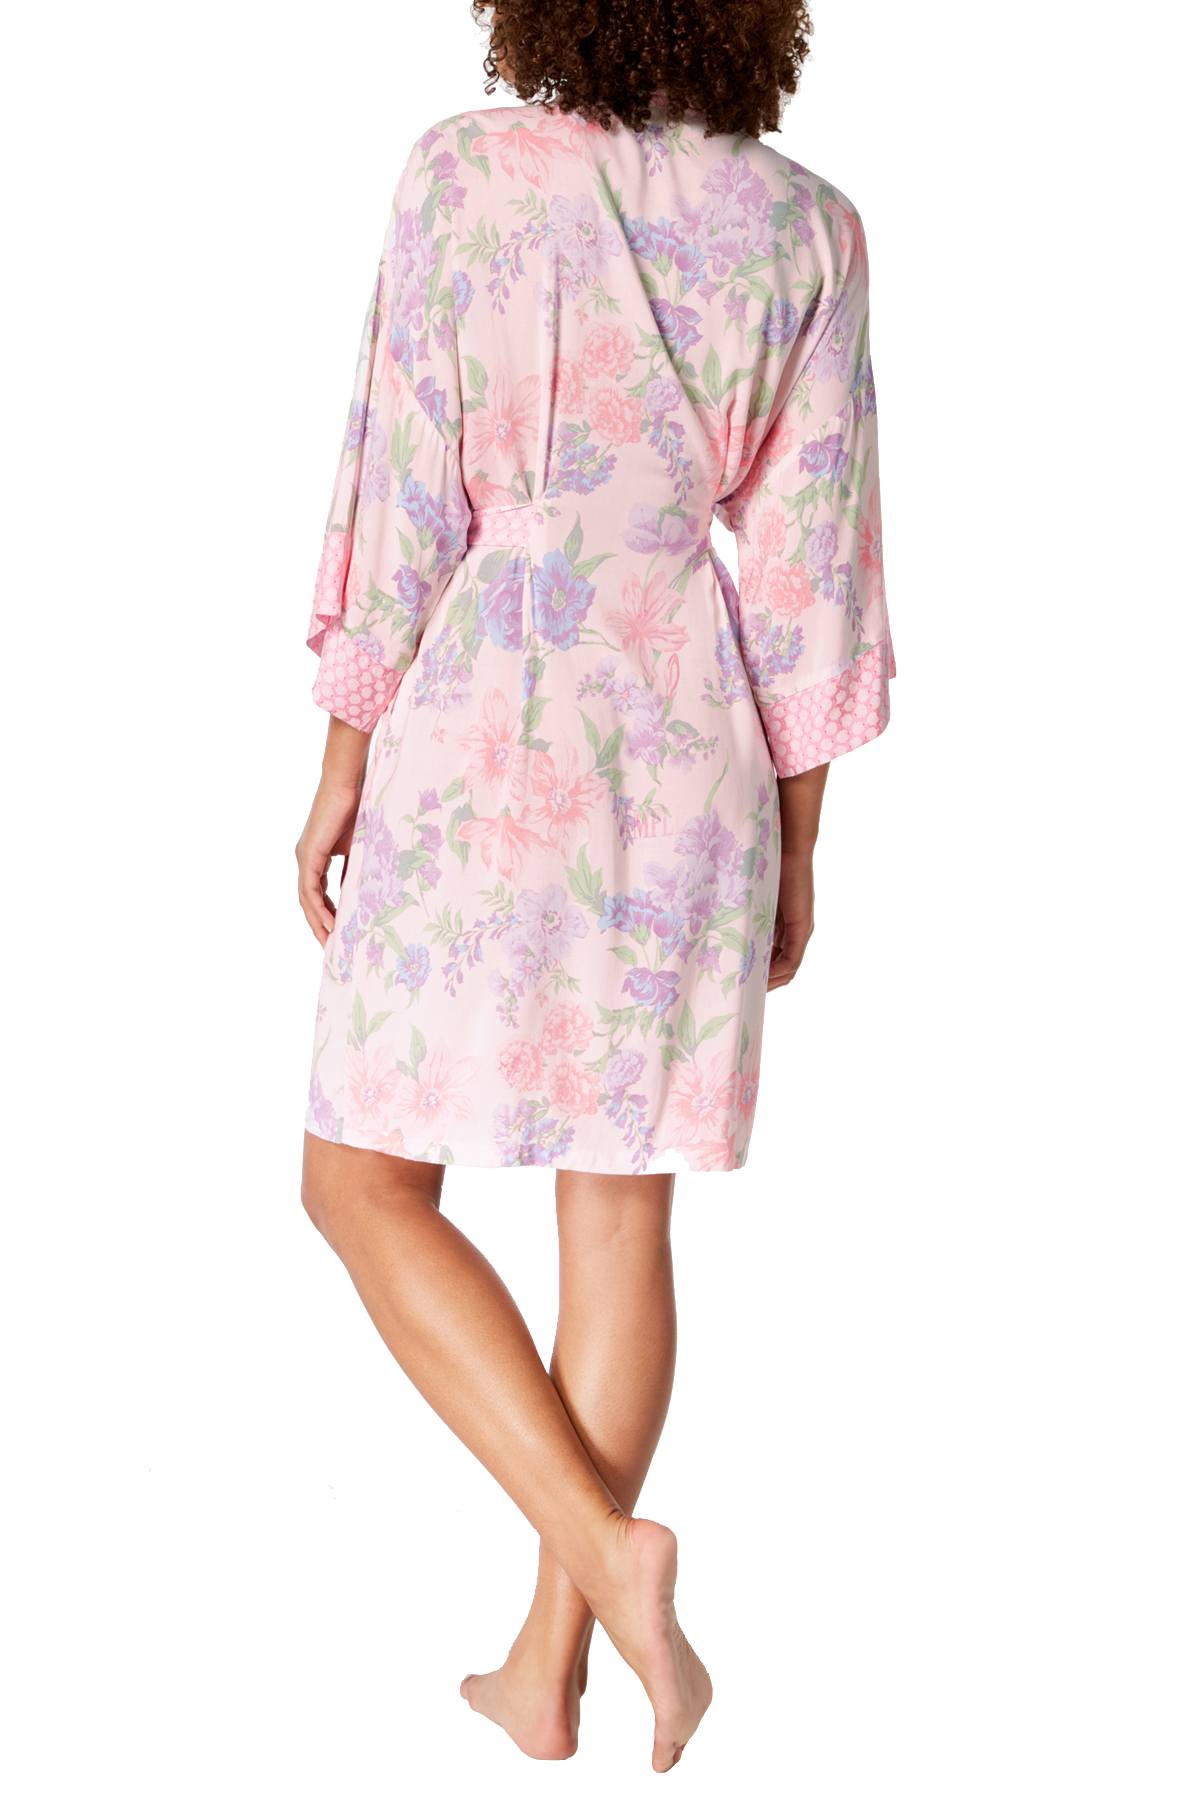 Miss Elaine Pink Floral-Printed Foulard Short Wrap Robe